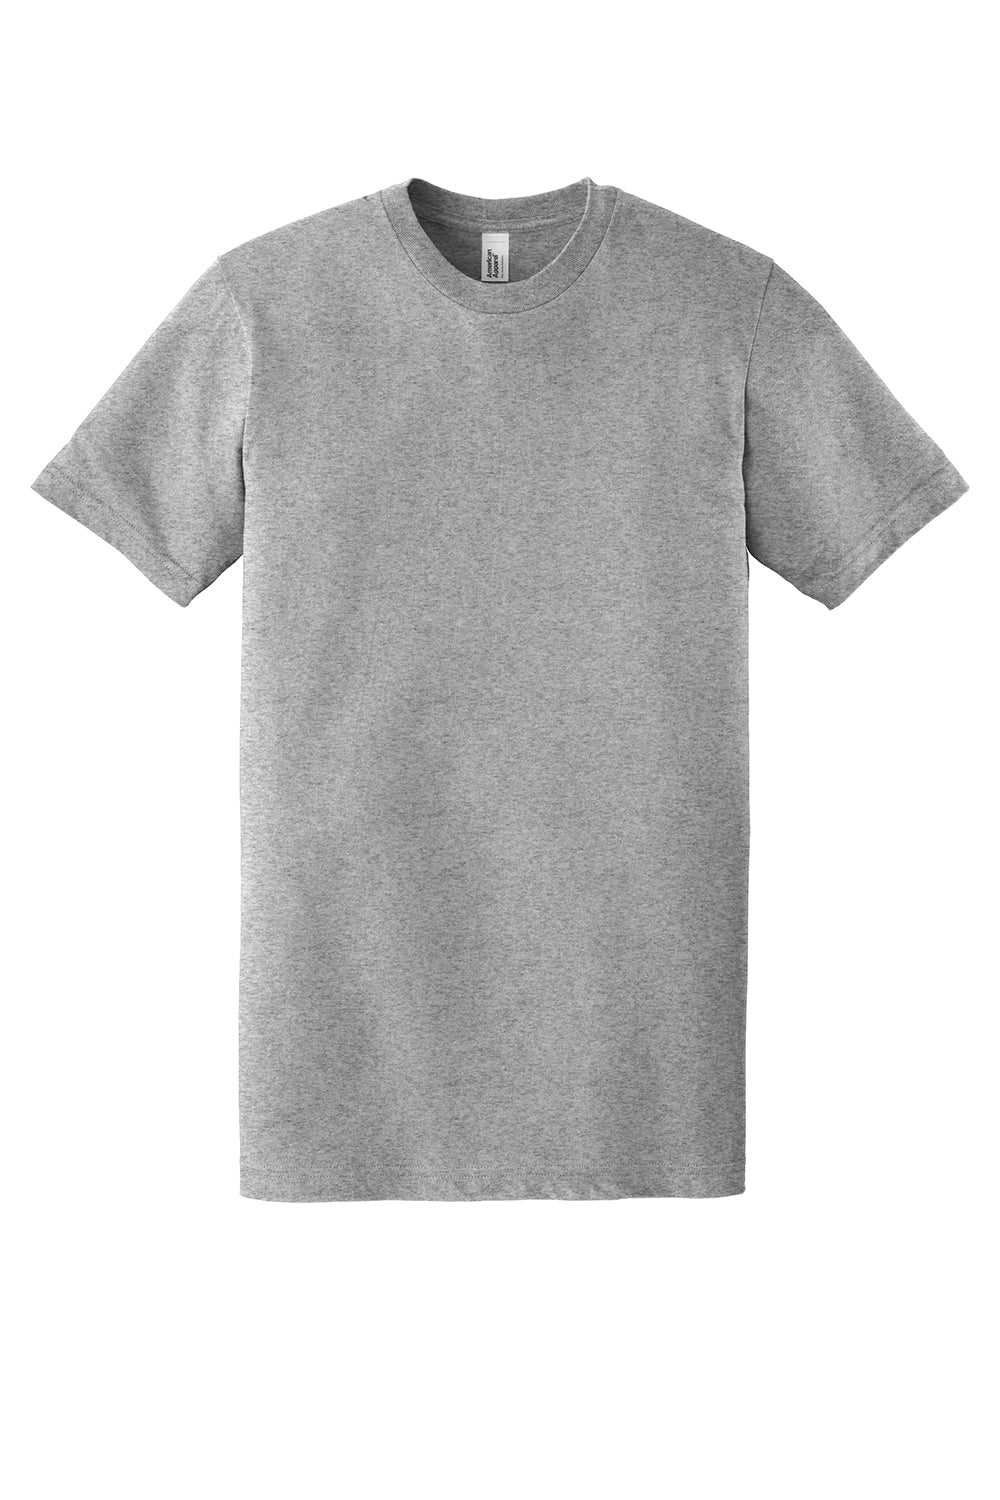 American Apparel 2001 Mens Fine Jersey Short Sleeve Crewneck T-Shirt Heather Grey Flat Front